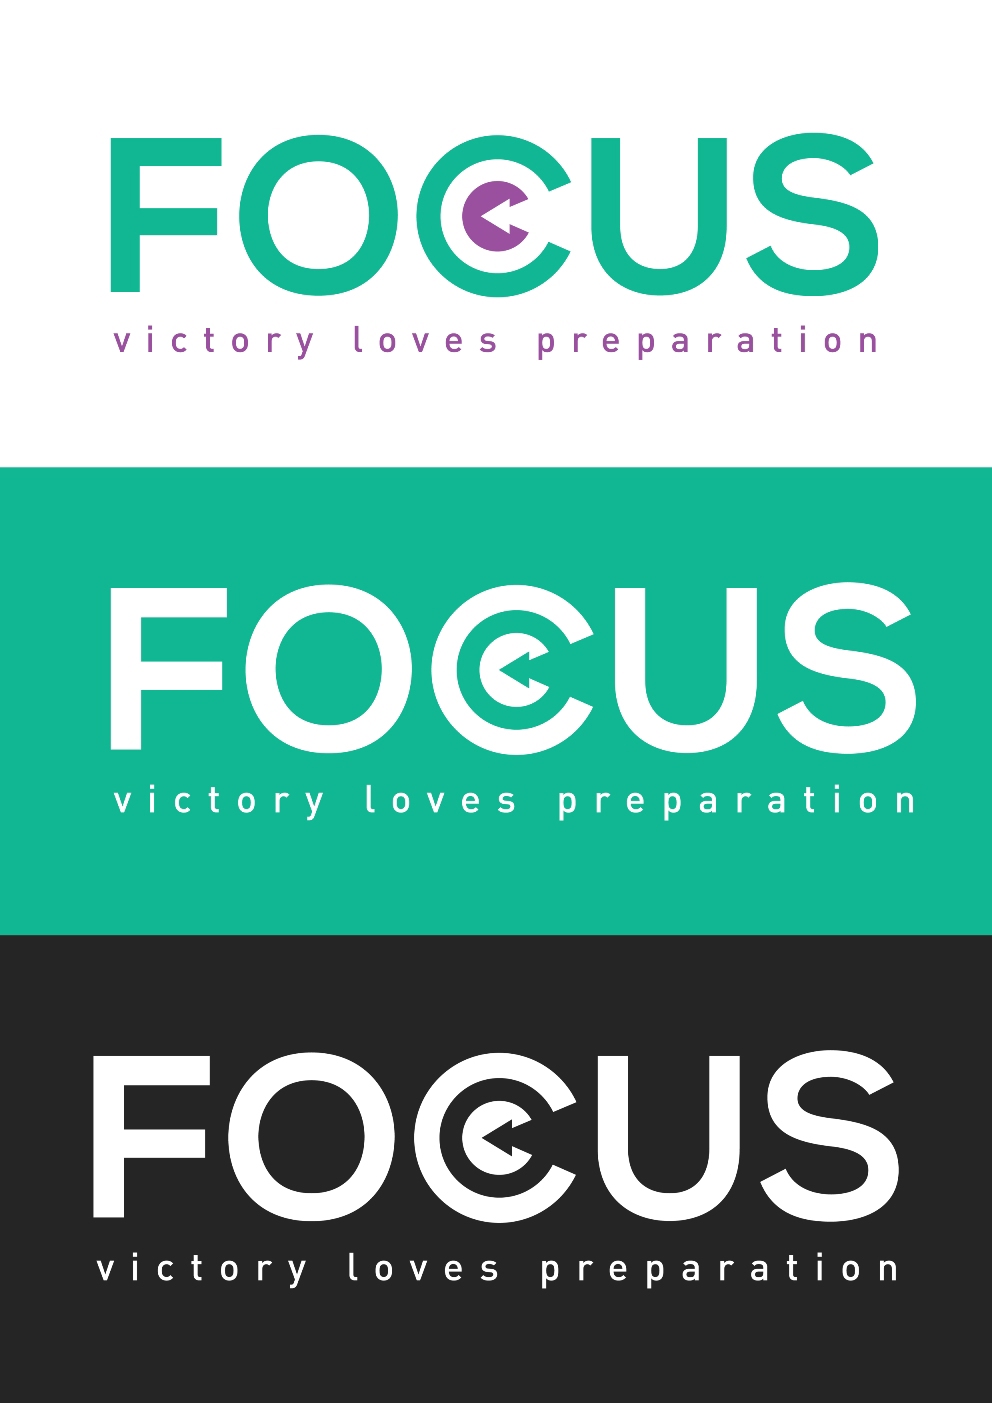 Focus logo target mission preparation